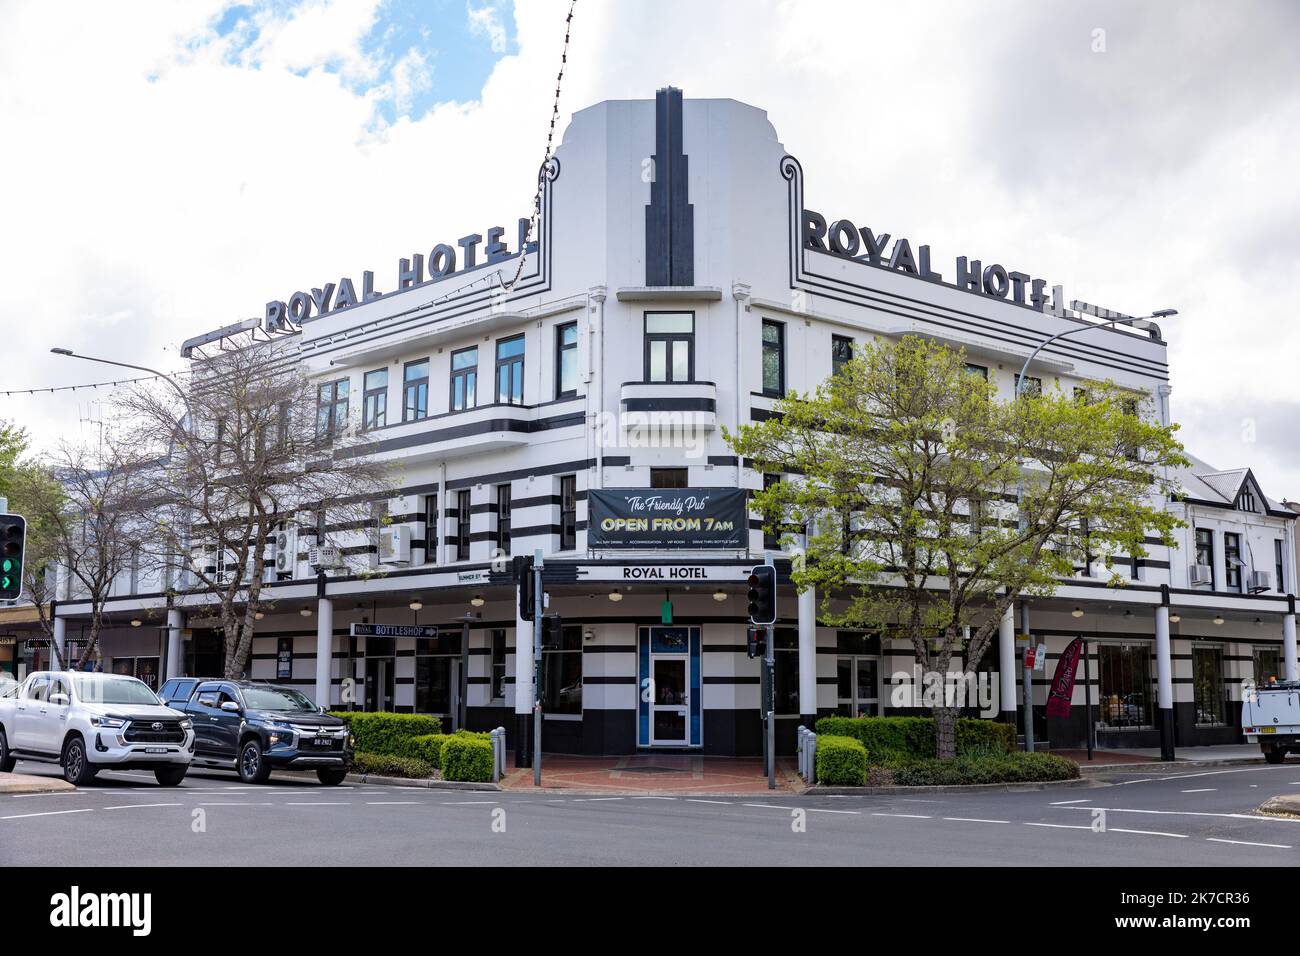 Royal Hotel Orange in regional NSW, offers accommodation and bars,Australia Stock Photo